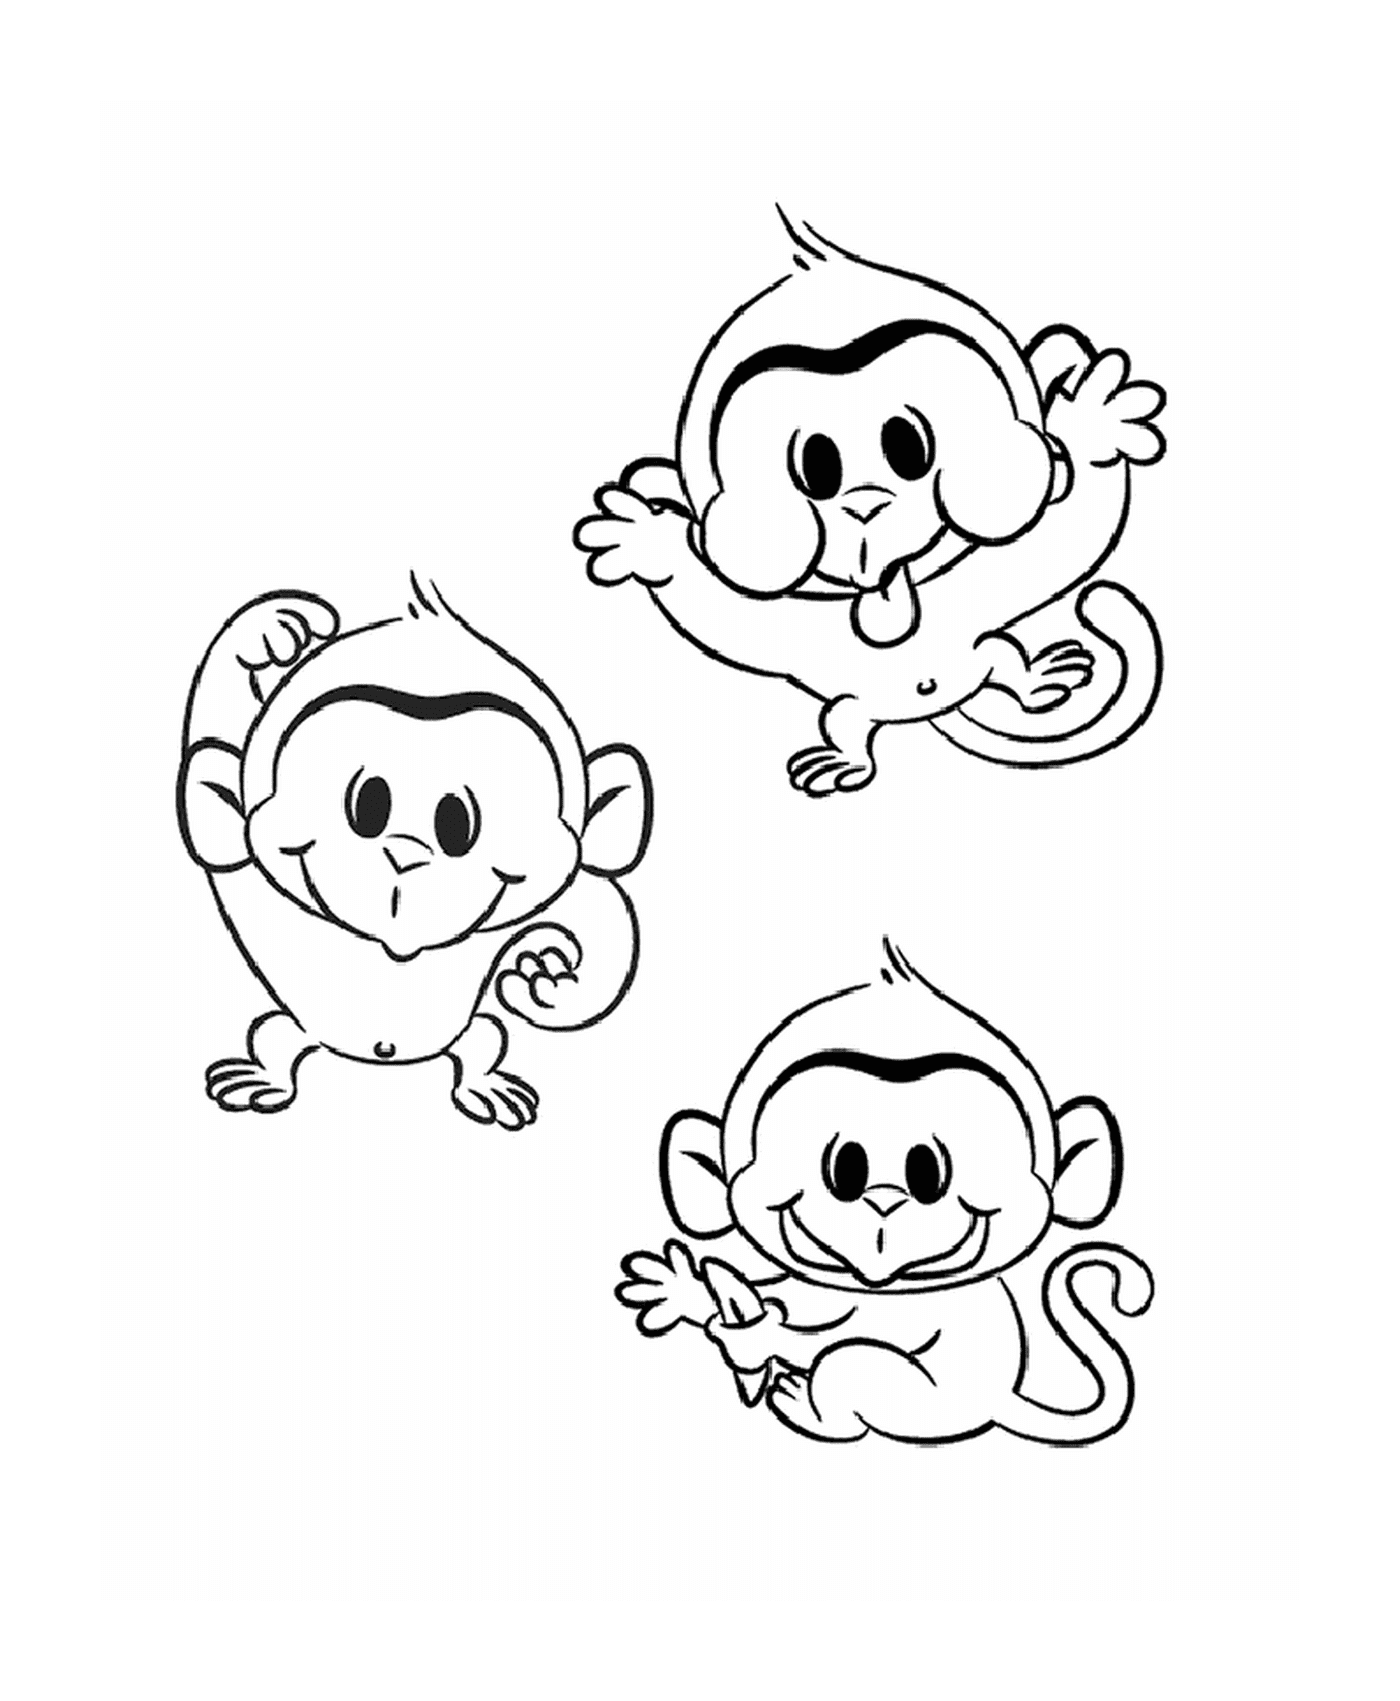  Three easy little monkeys 